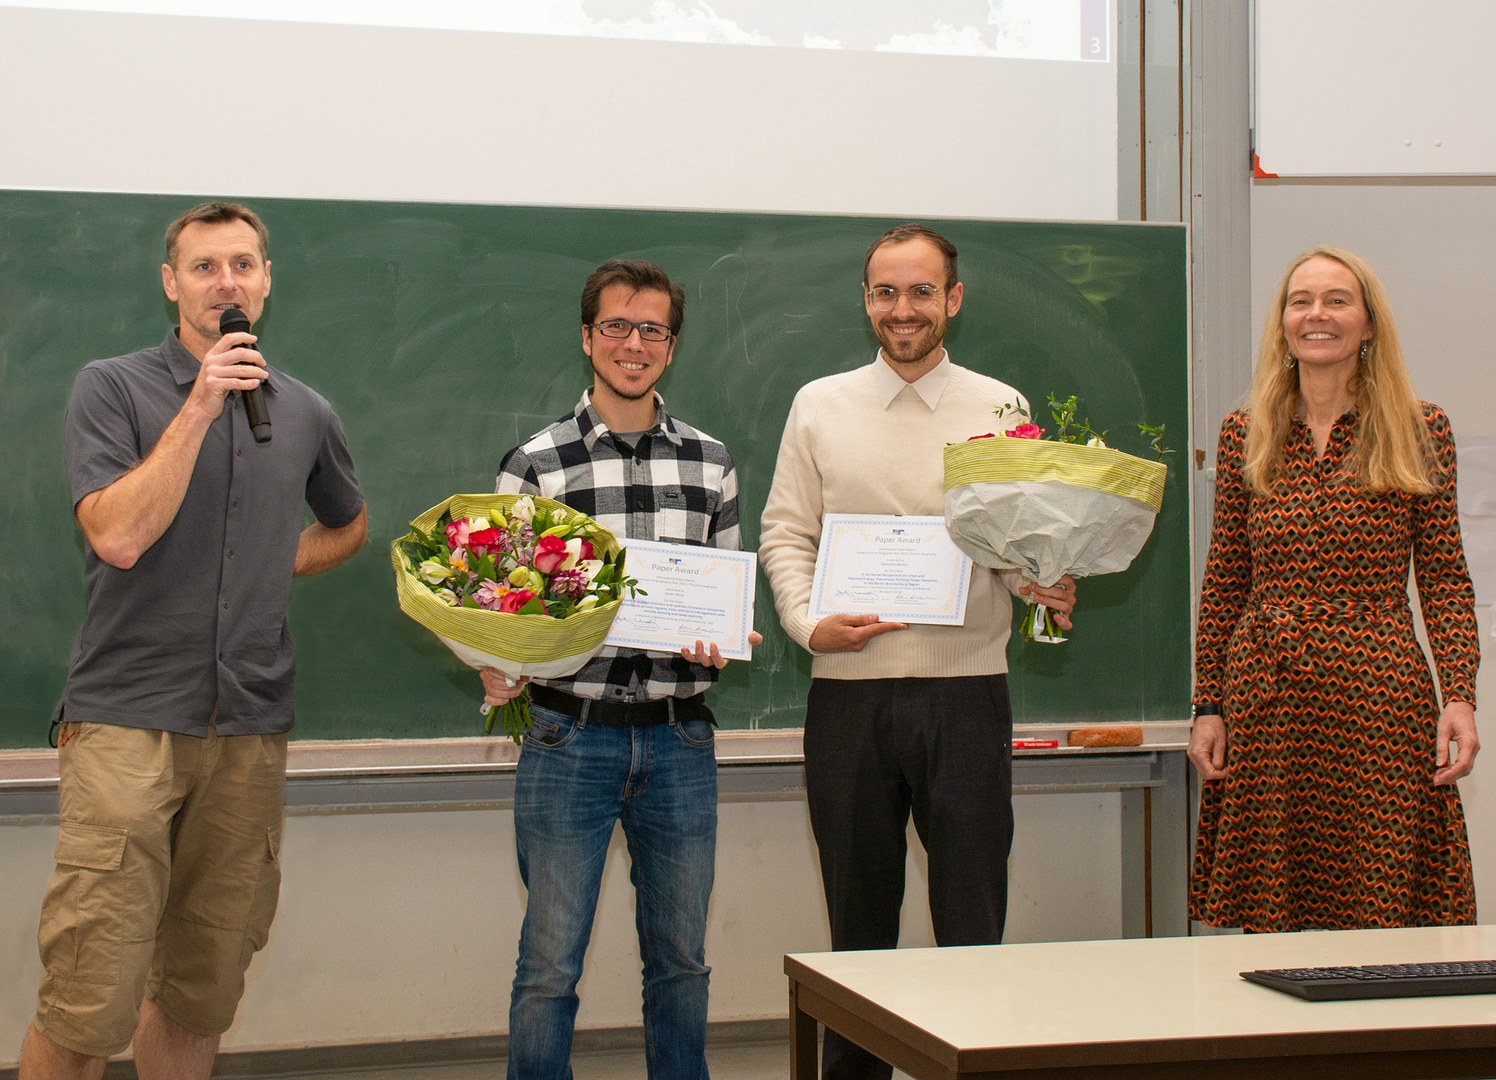 Gewinner des Paper Awards mit Dr. Simone Giertz und Prof. Dr. Zbynek Malenovsky